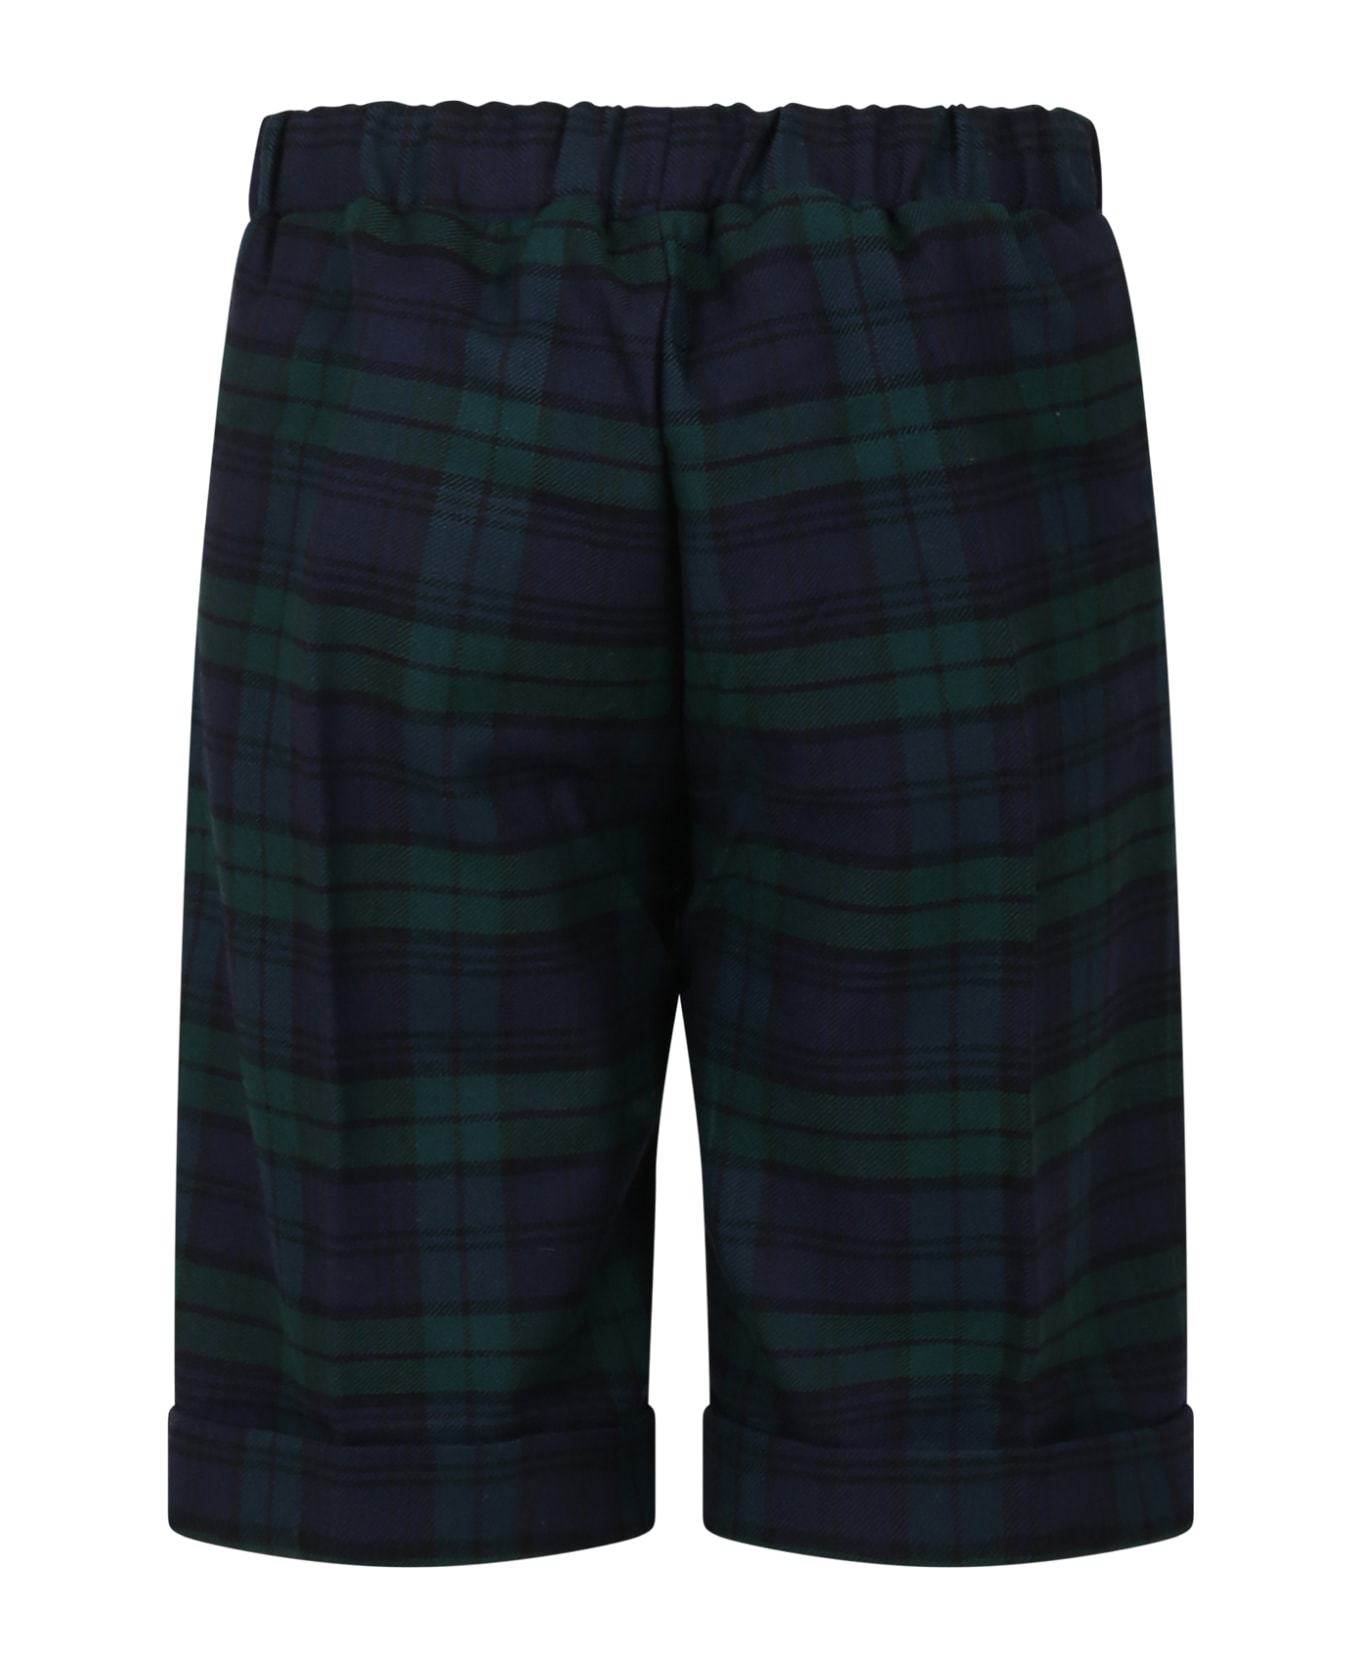 La stupenderia Green Shorts For Boy - Green